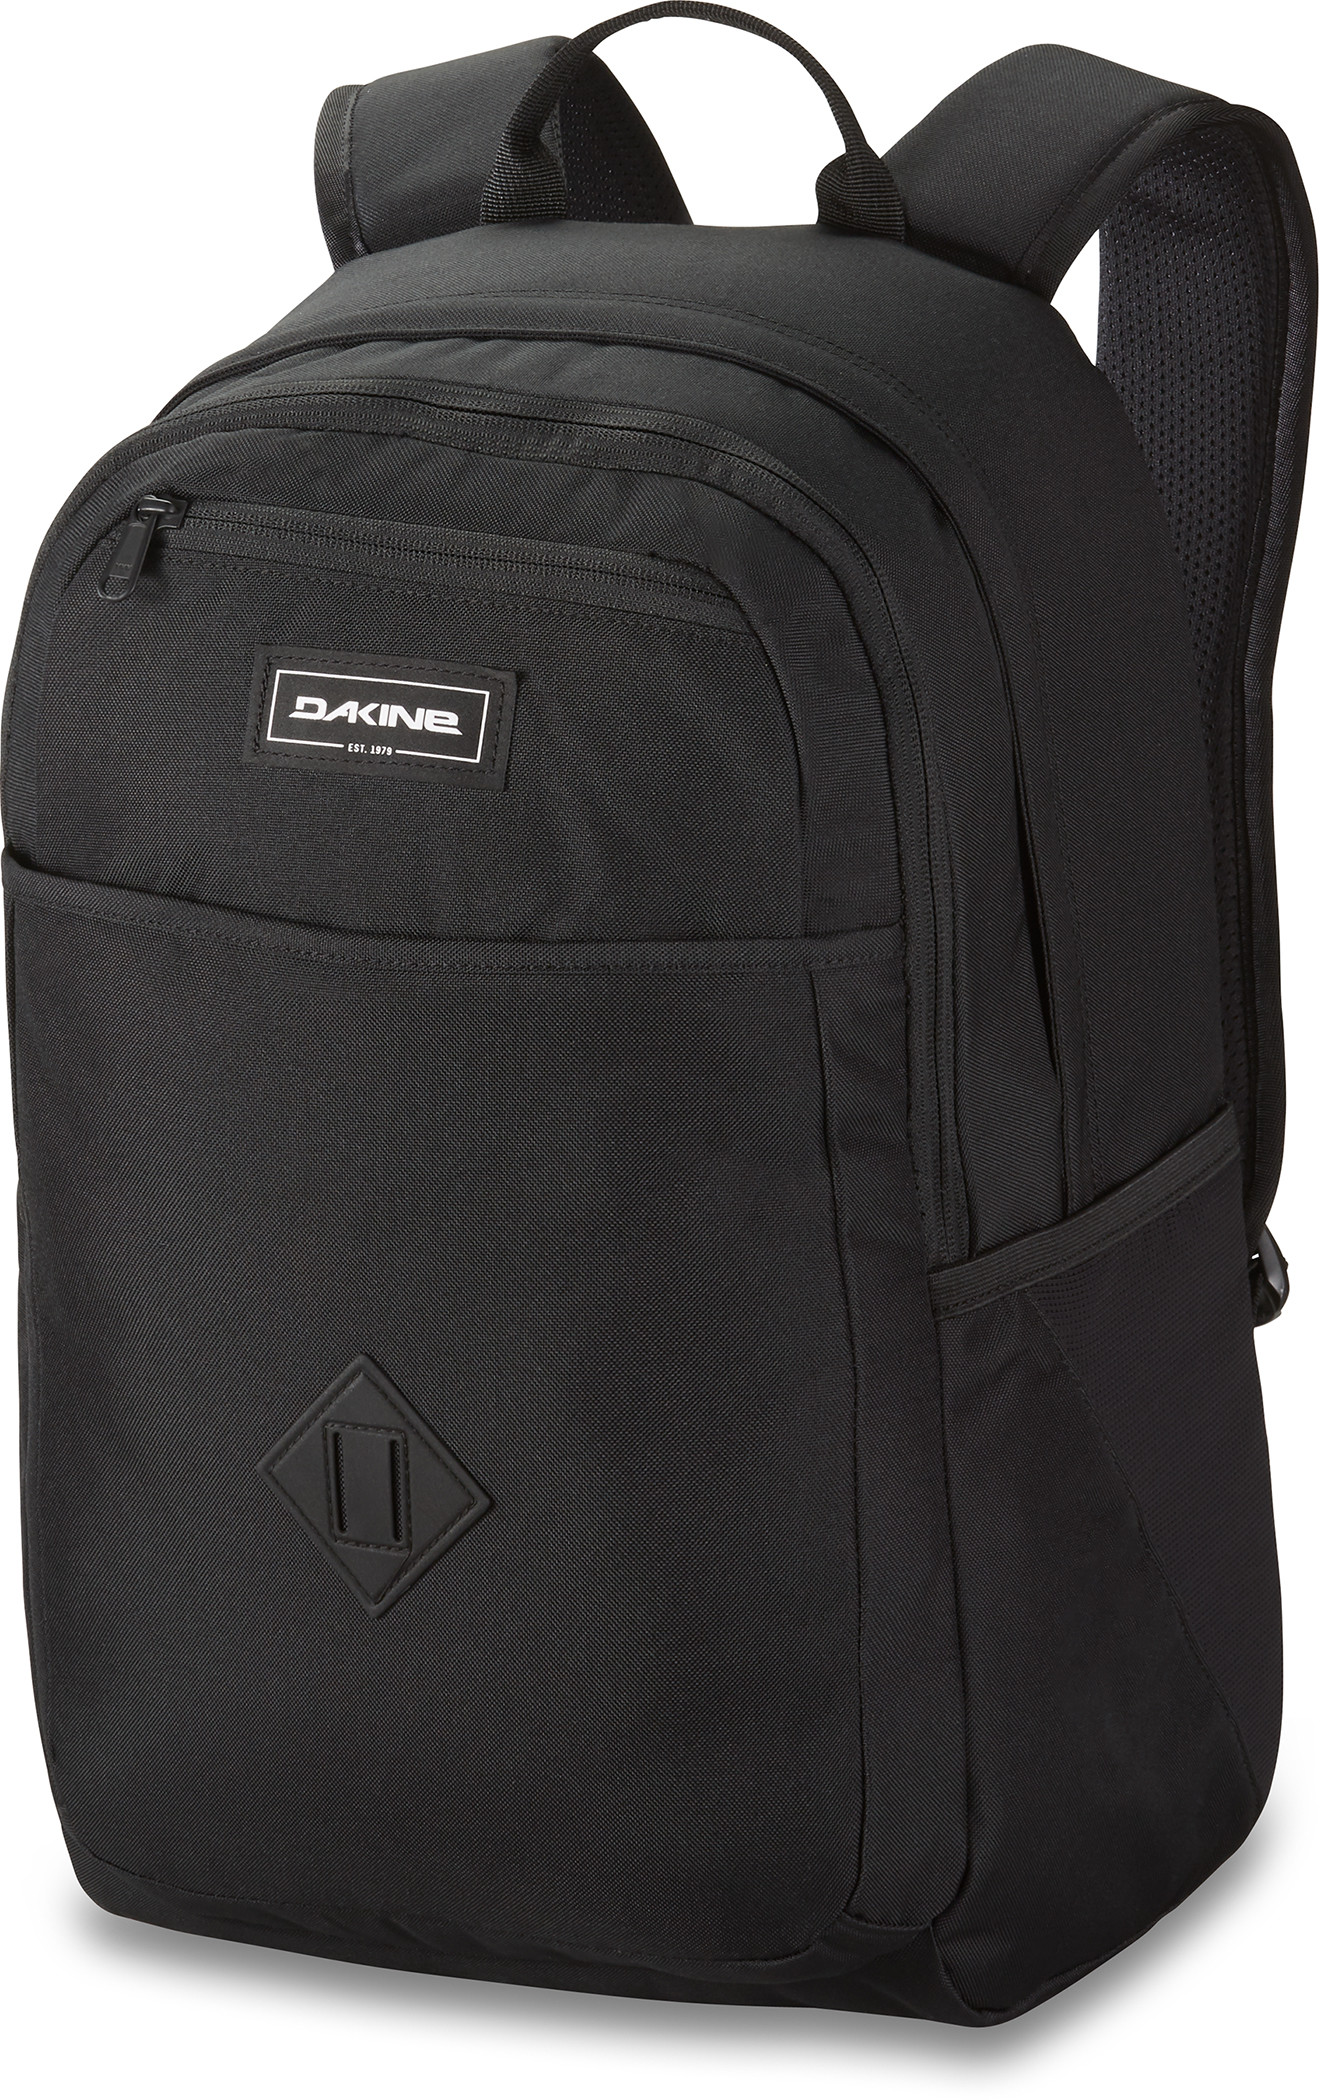 Essentials 26L Backpack